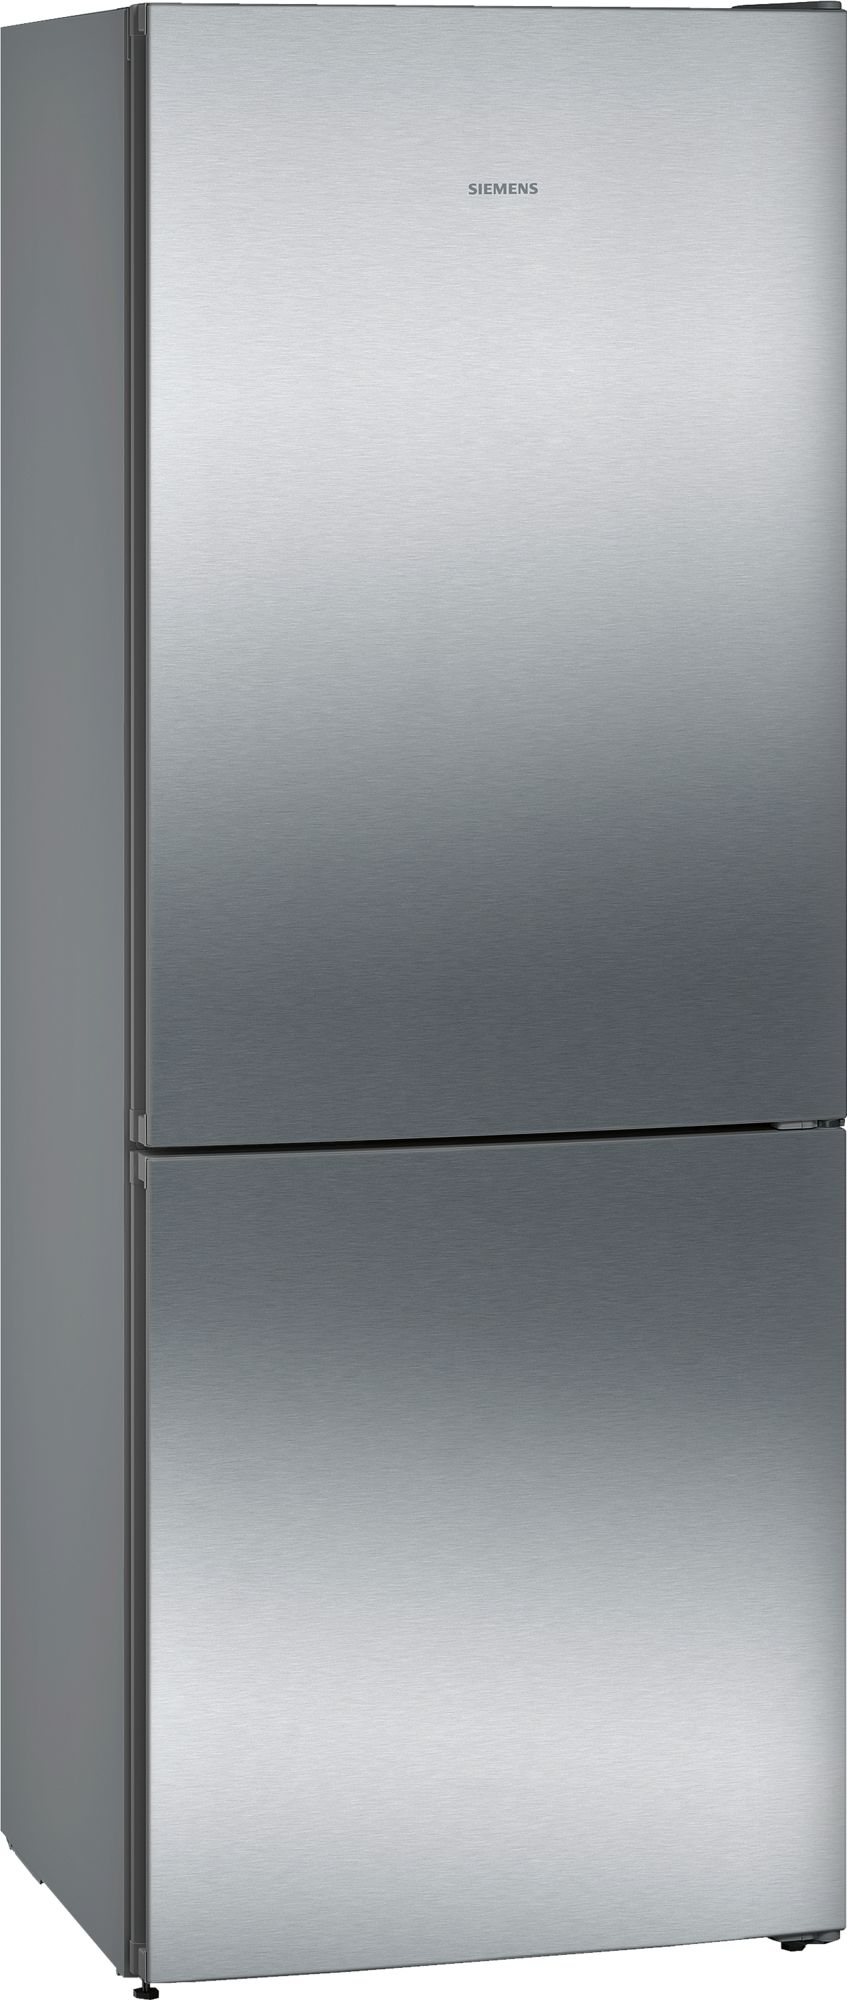 iQ300 Alttan Donduruculu Buzdolabı 186 x 70 cm Kolay temizlenebilir Inox